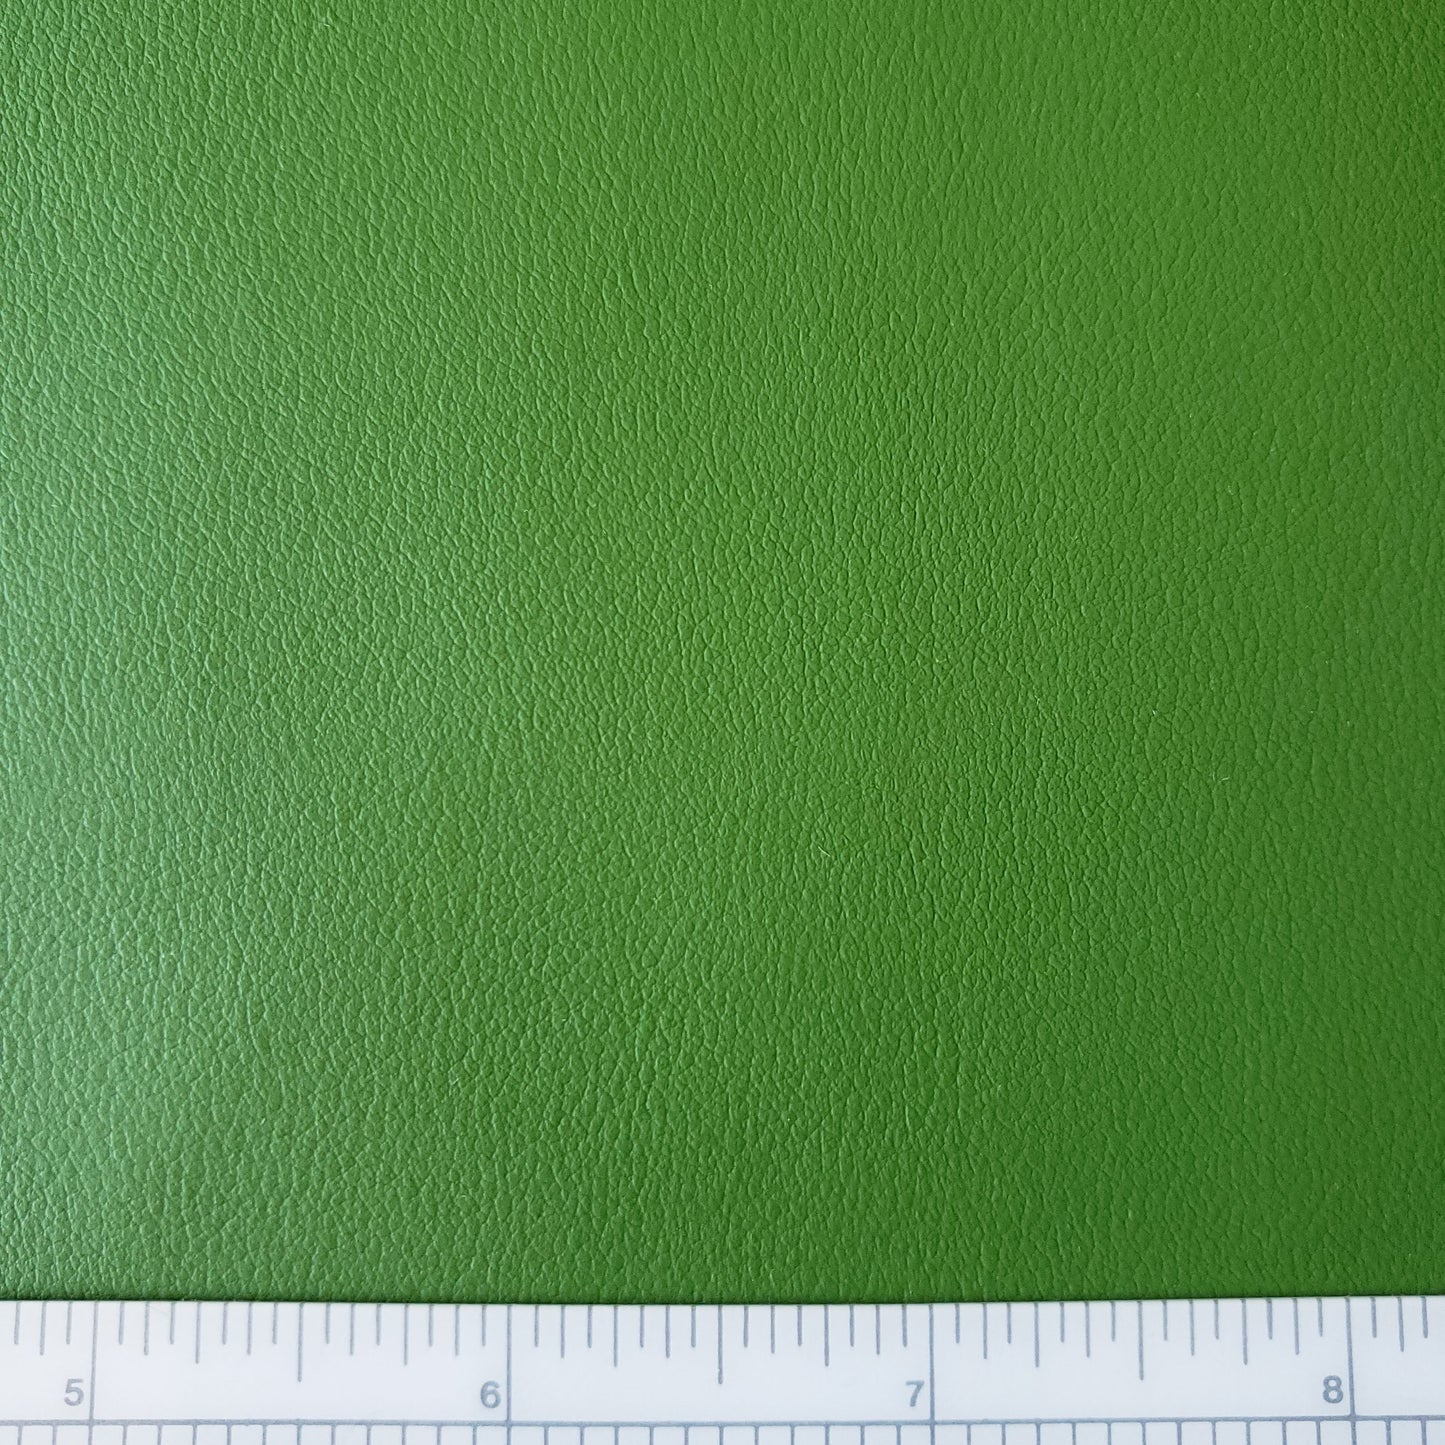 Go Green Silica Leather